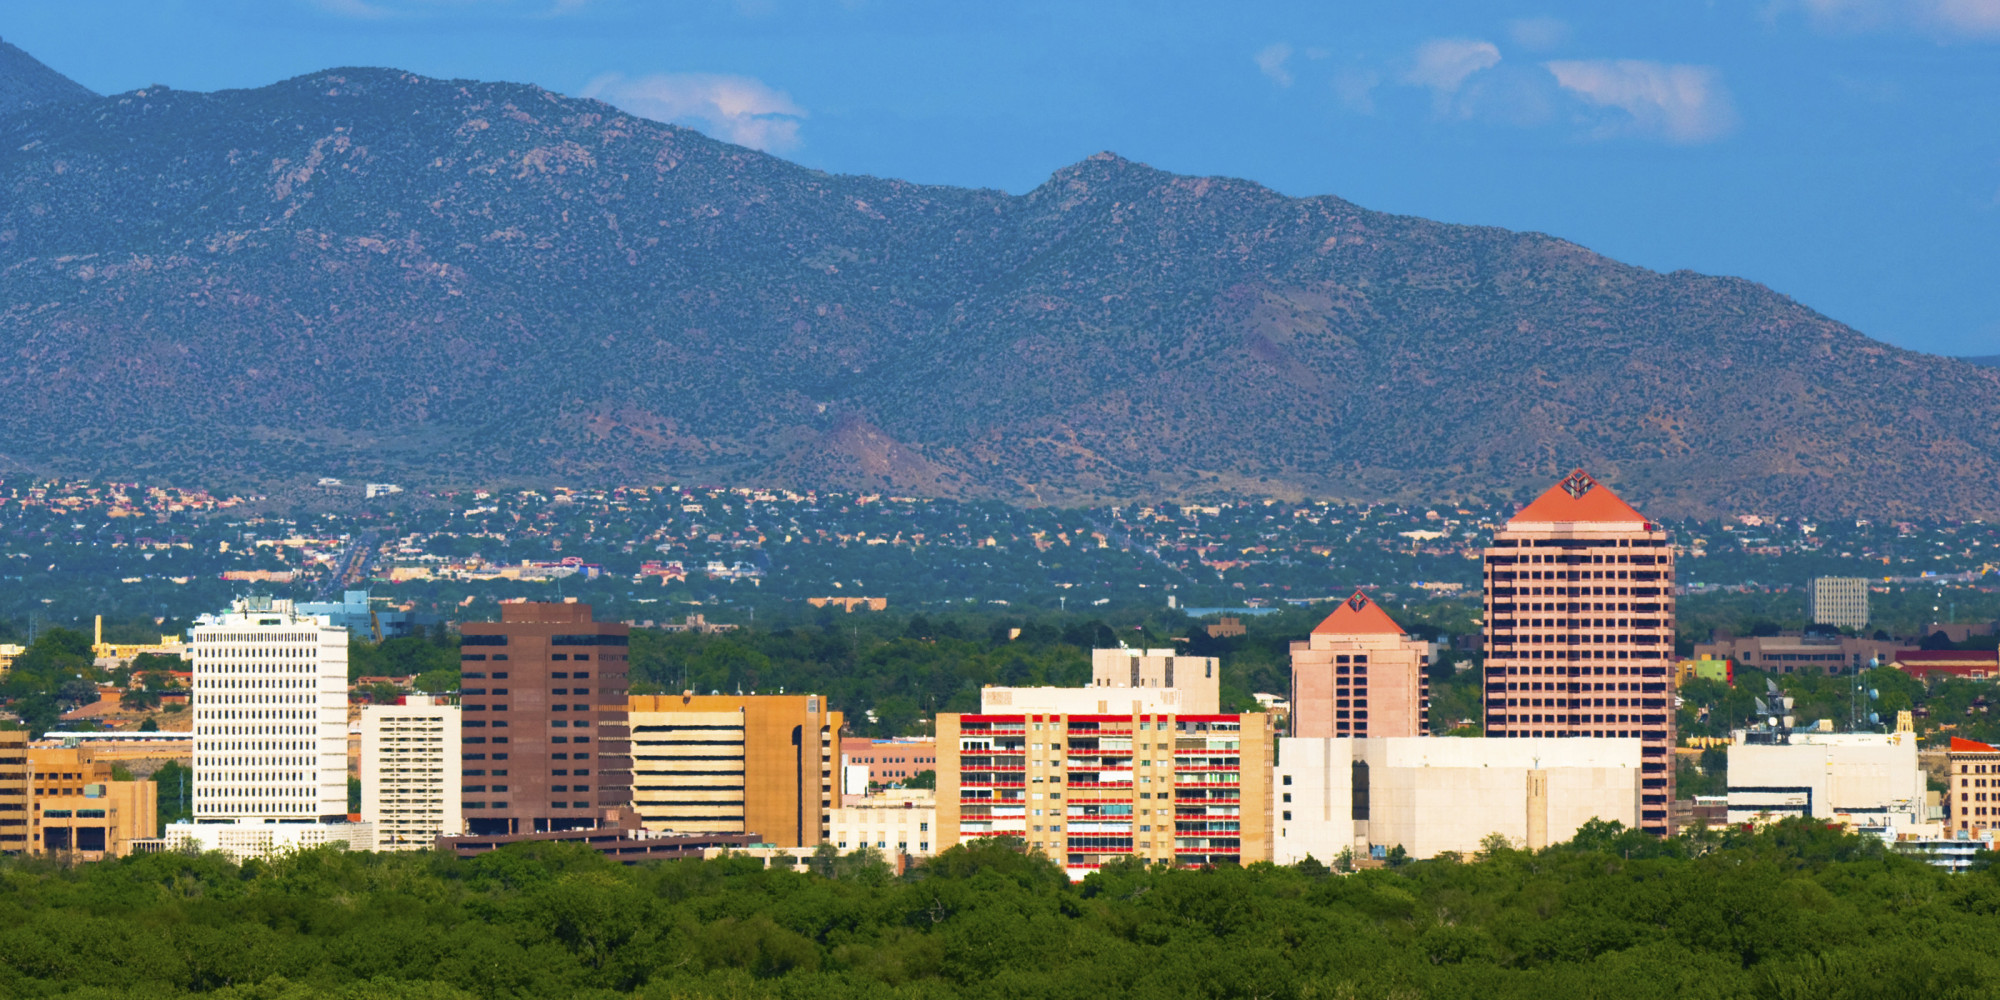 Albuquerque skyline and mountains